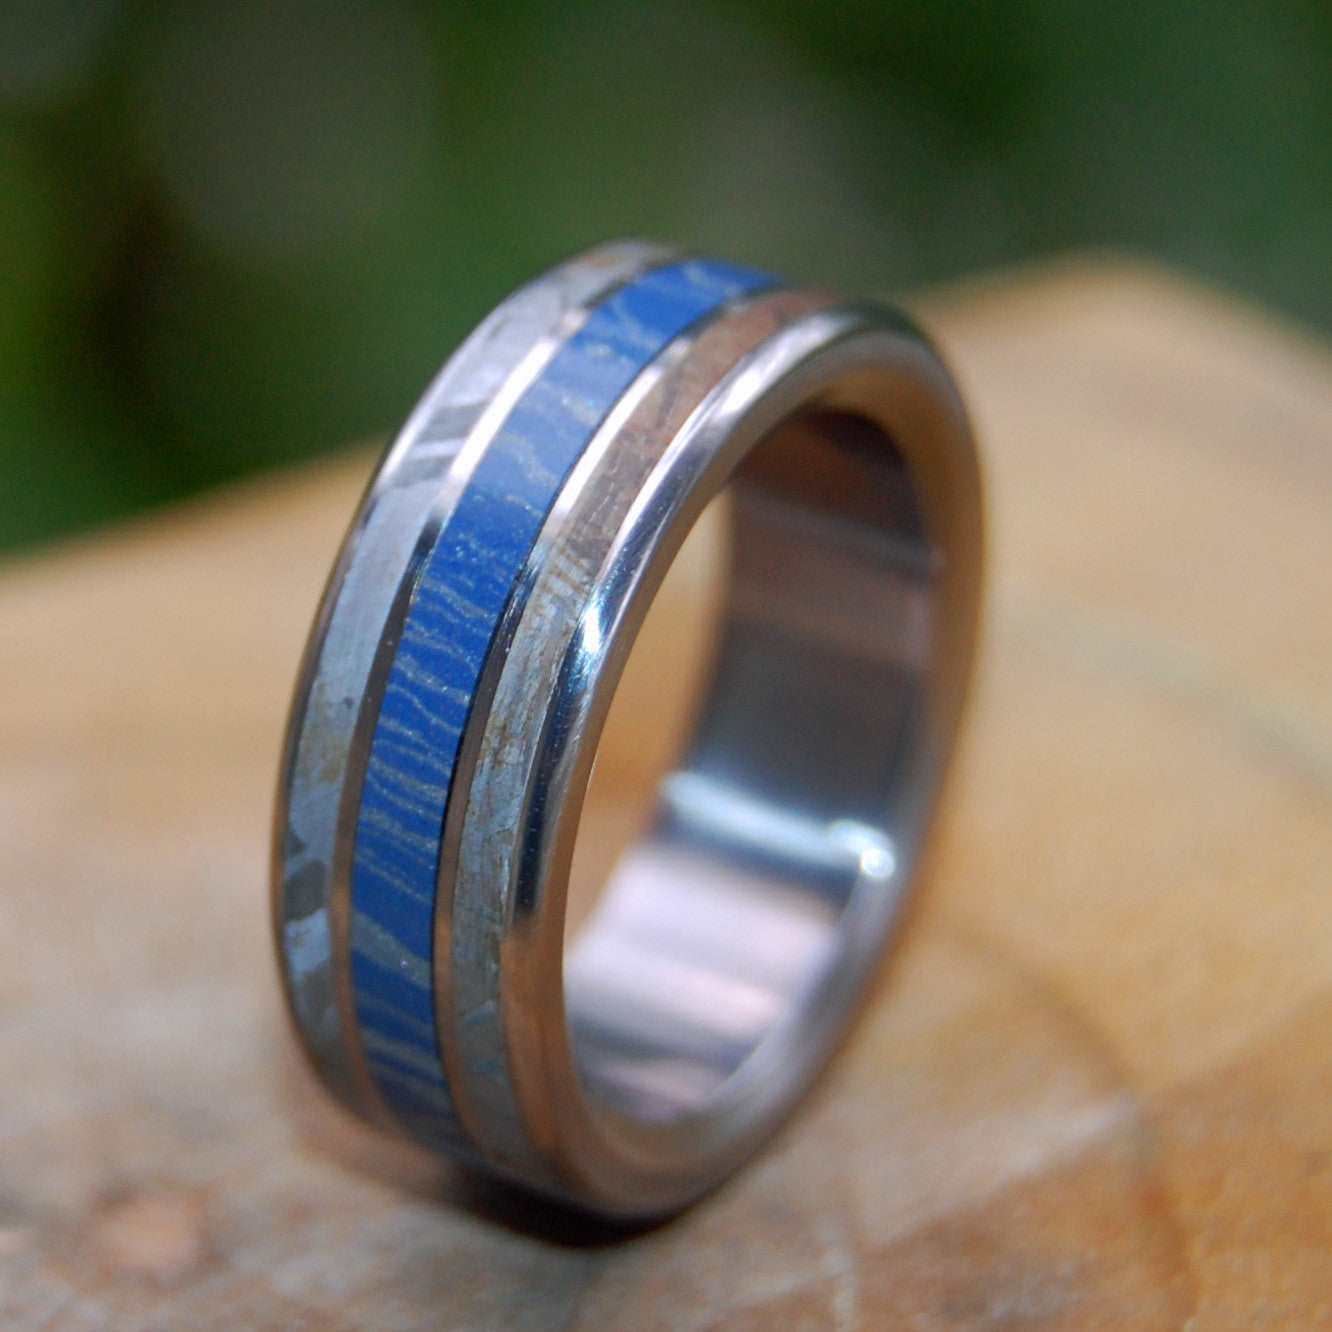 FINAL FRONTIER | Meteorite & Blue Silver Mokume Gane M3 Titanium Wedding Rings for Men and Women - Minter and Richter Designs